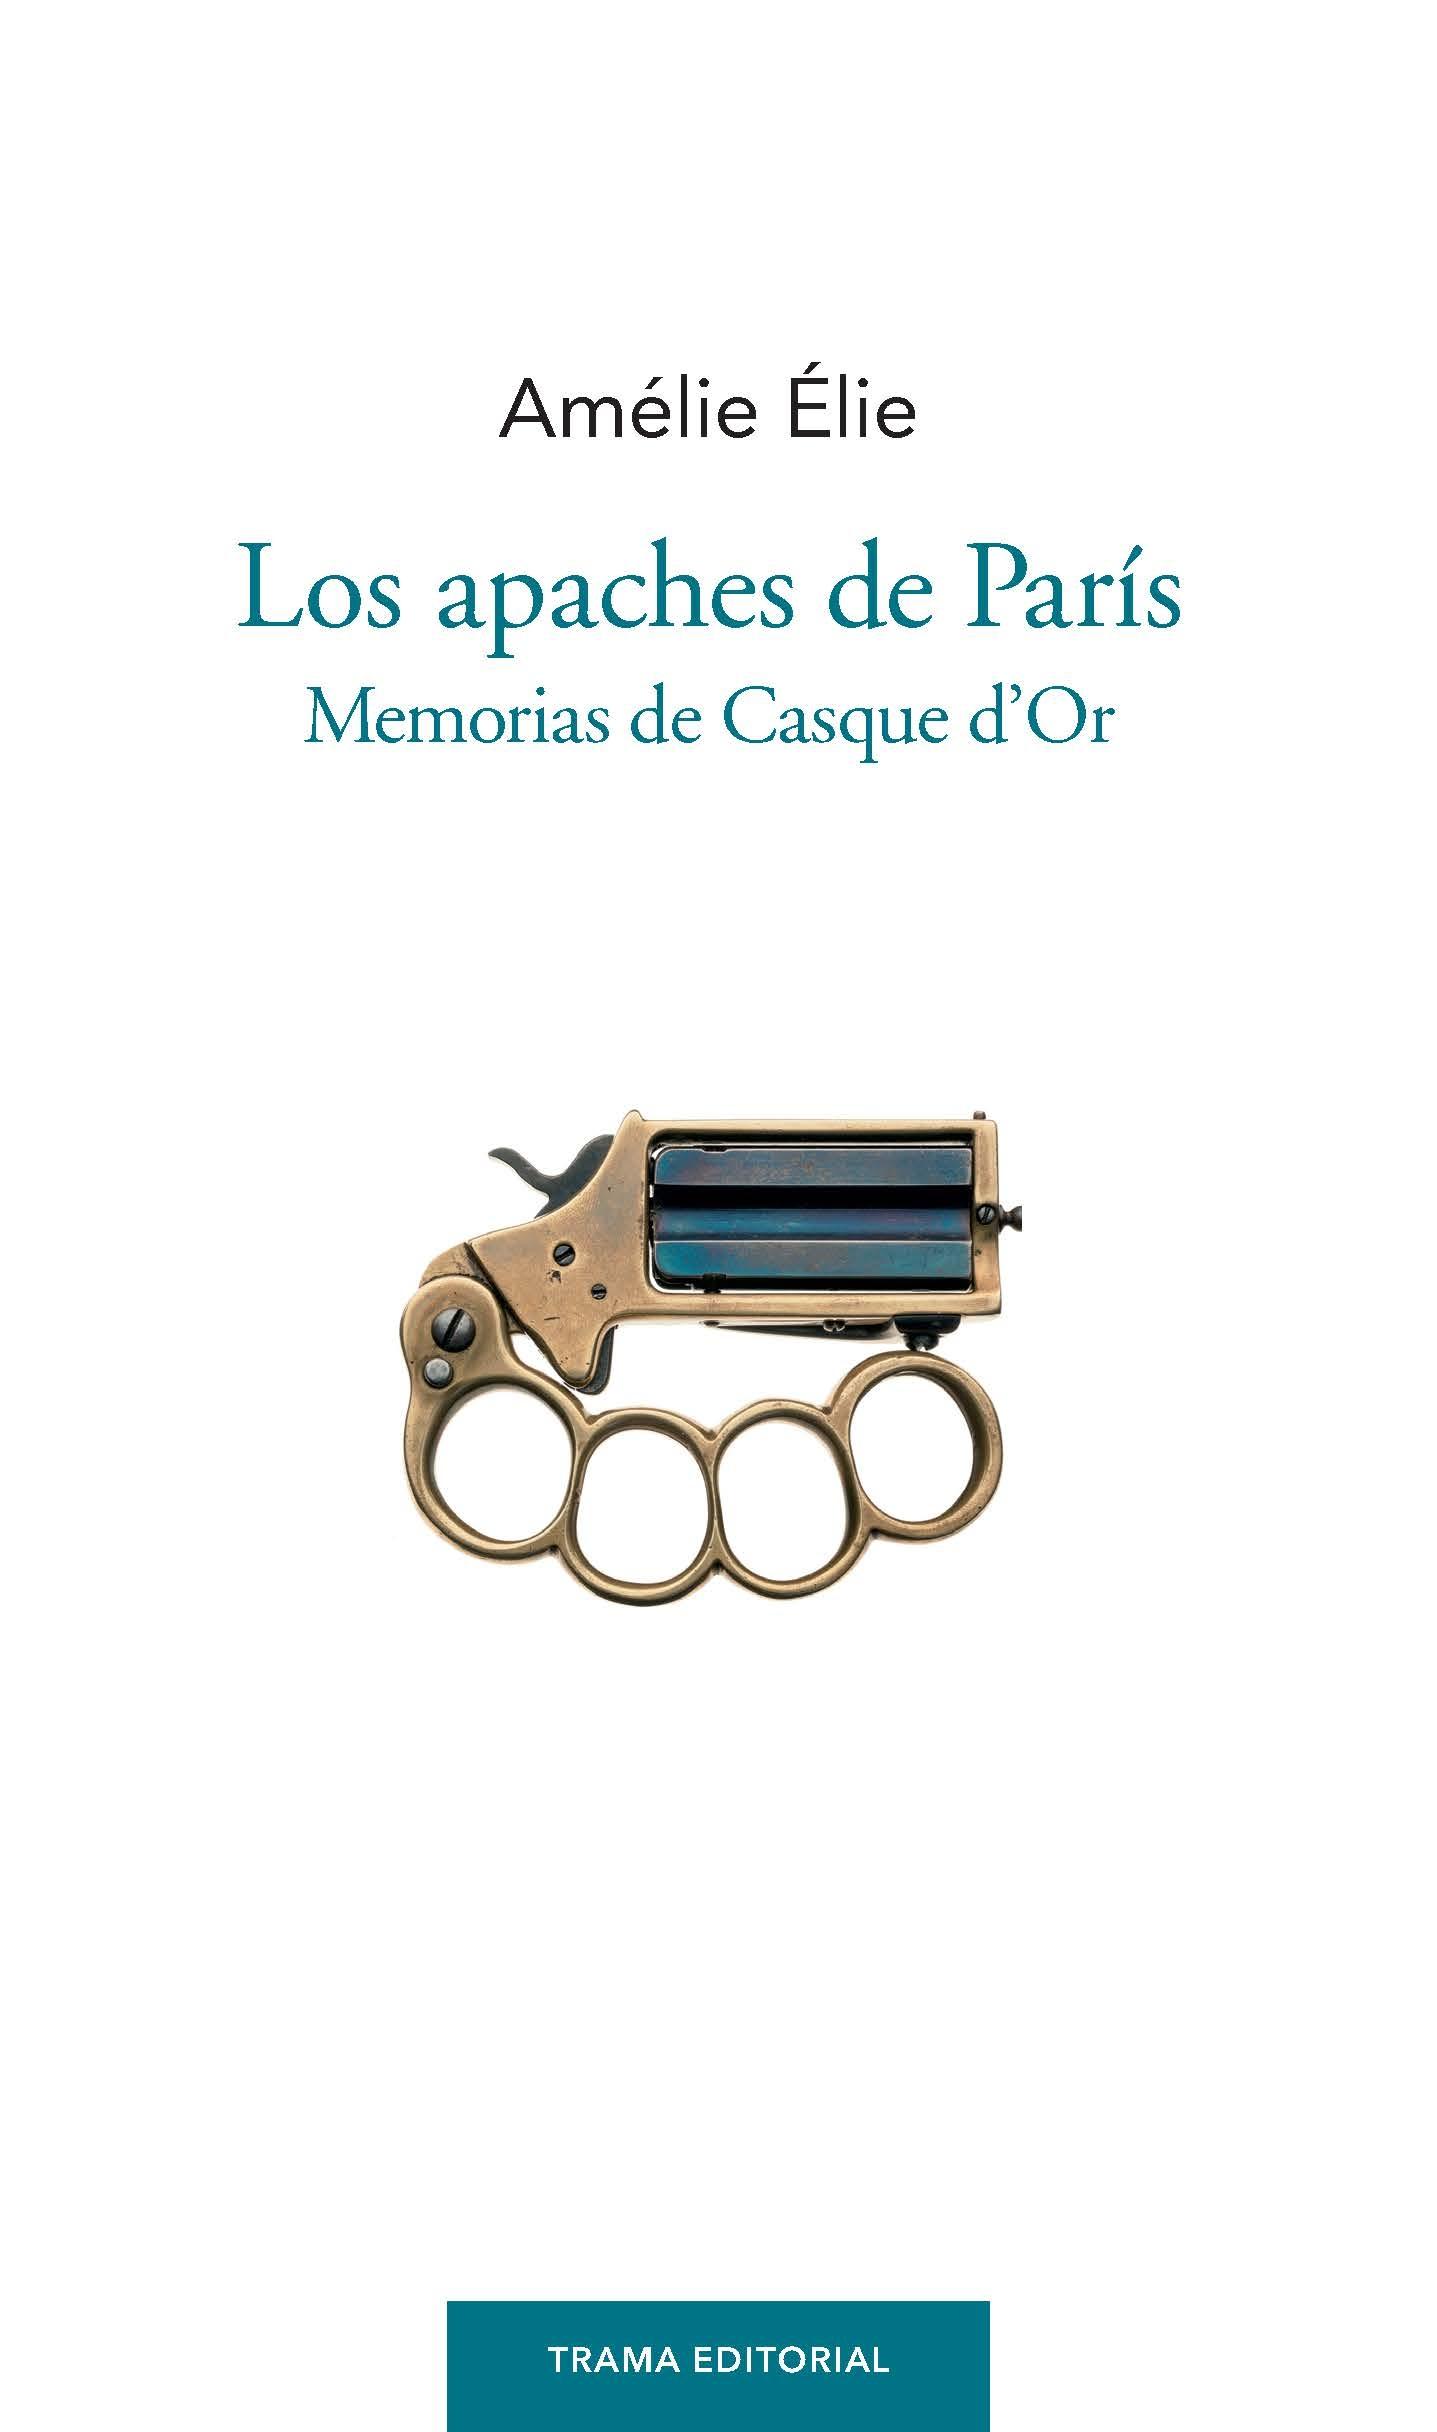 Los apaches de París: Memorias de Casque dOr. 